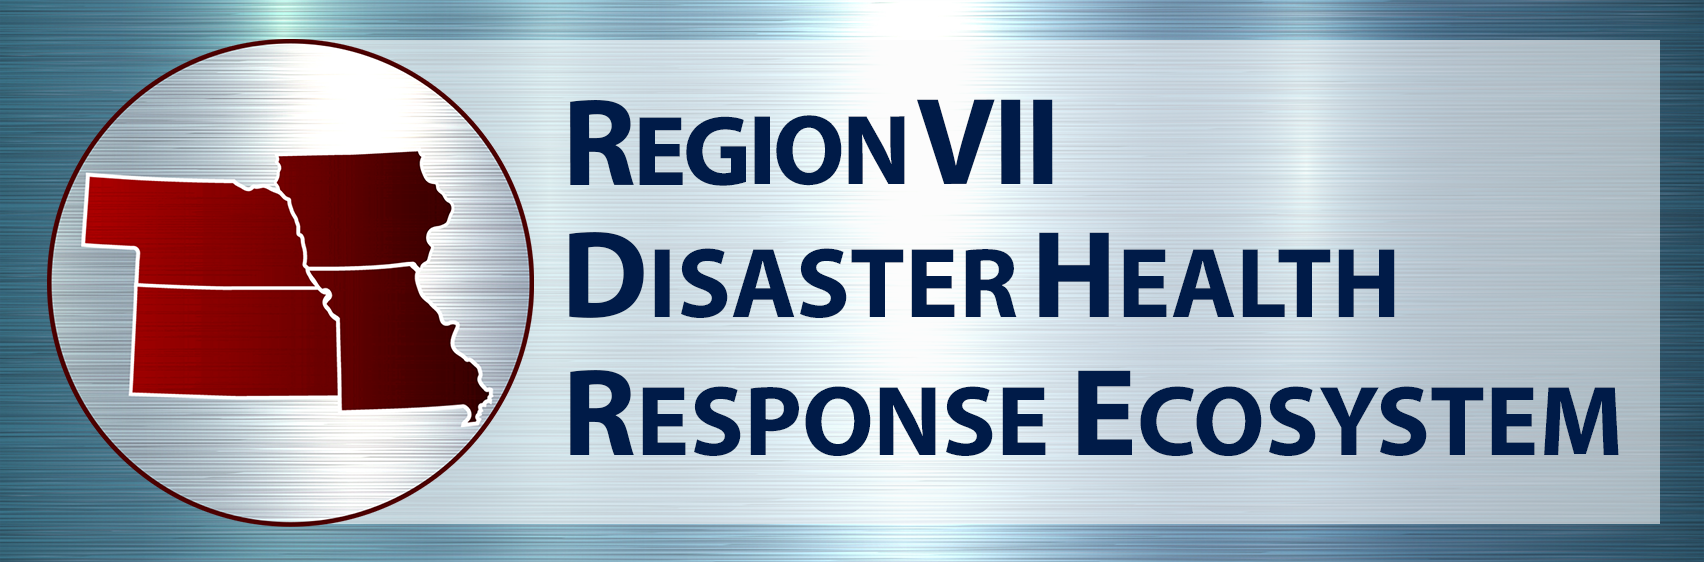 Region VII Disaster Health Response Ecosystem